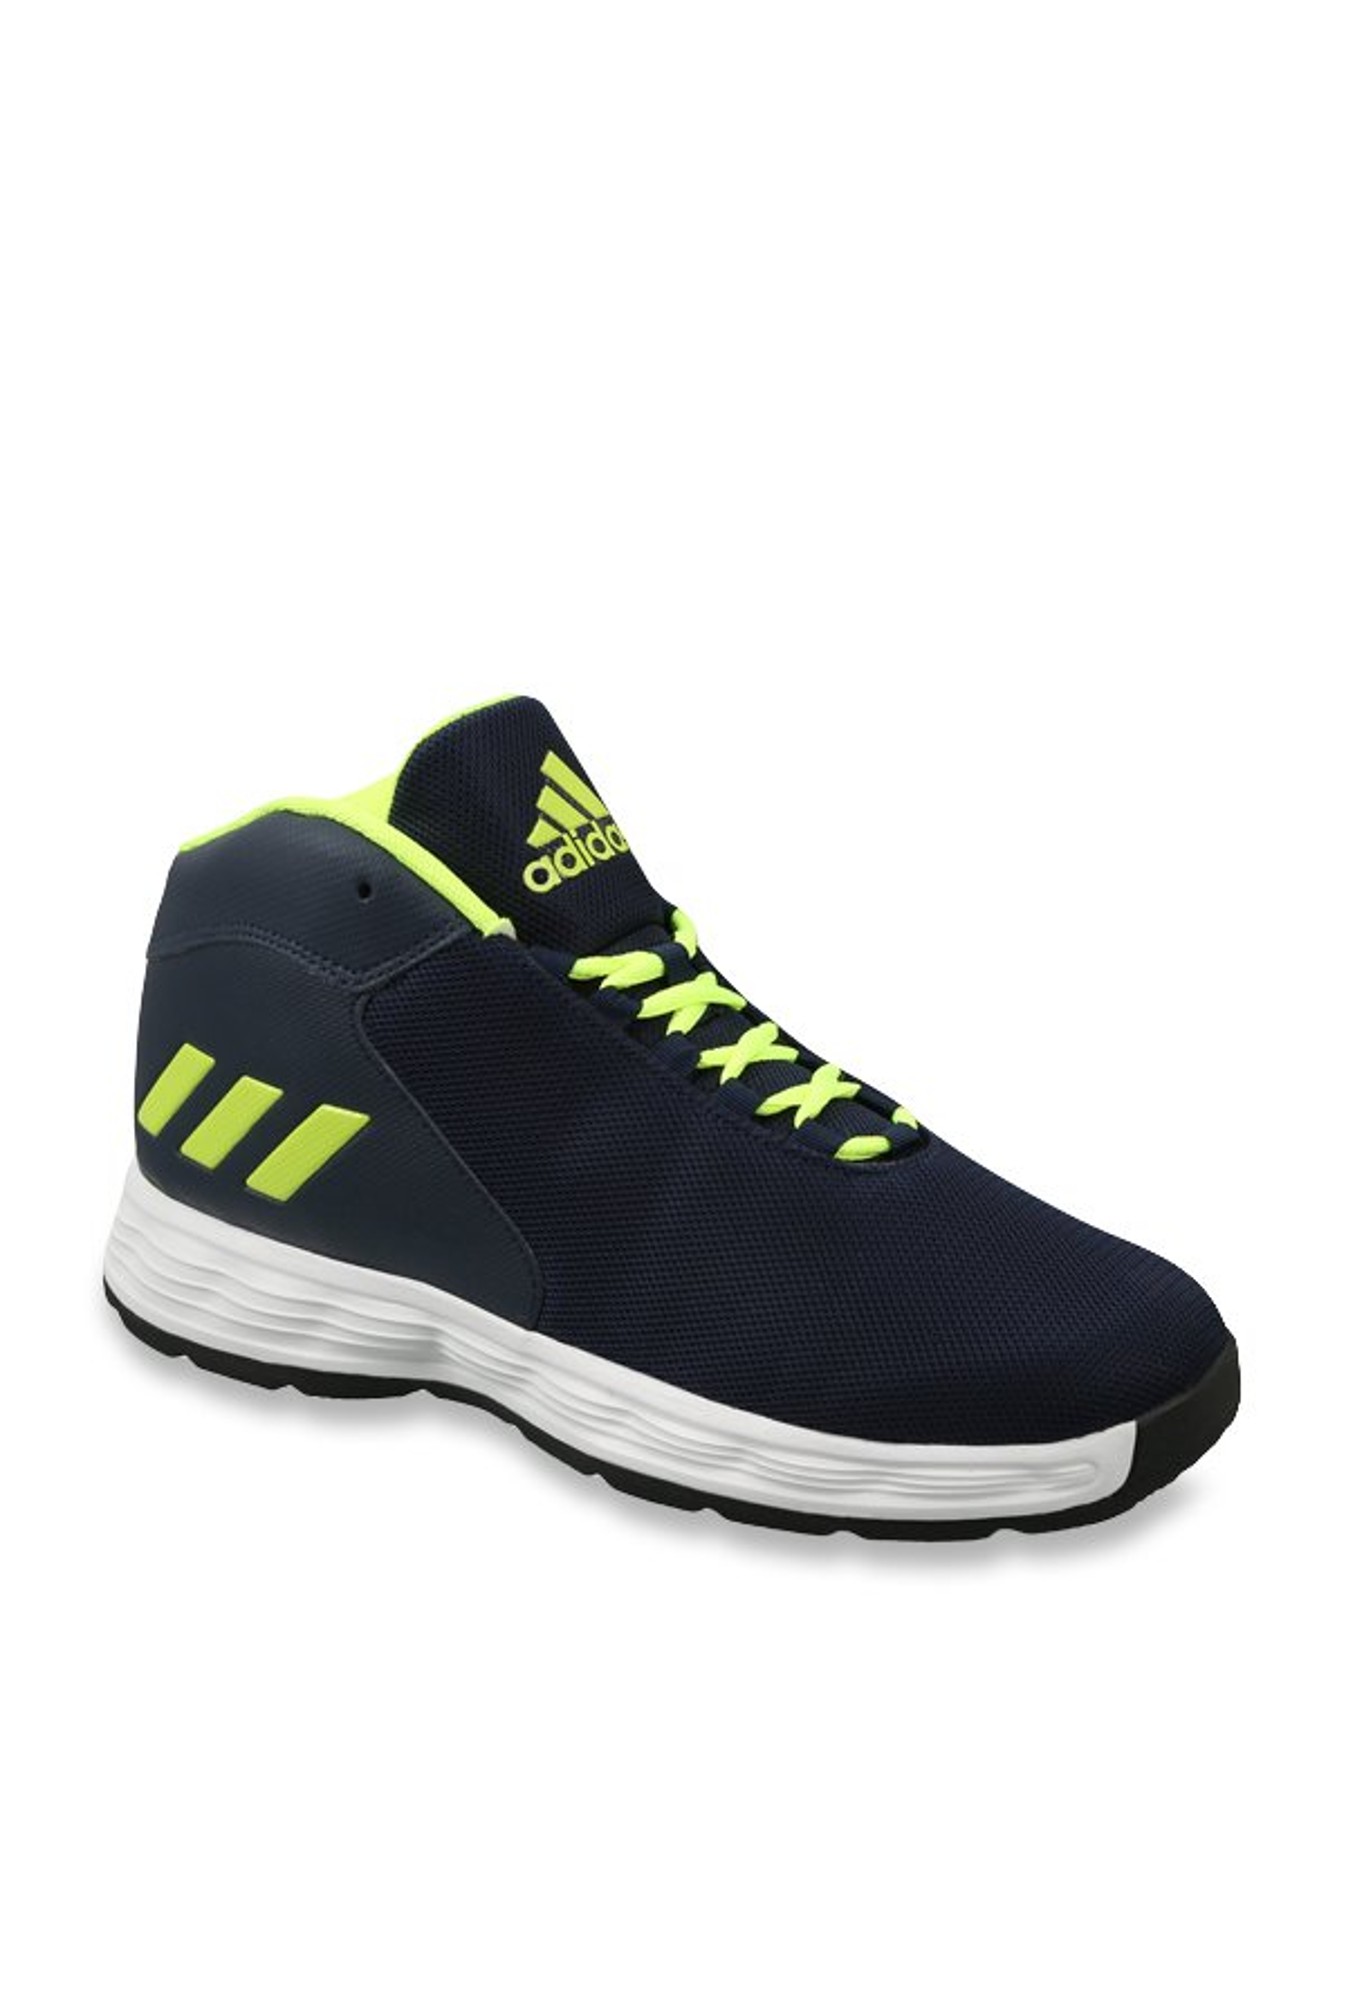 Adidas Hoopsta Navy Basketball Shoes 